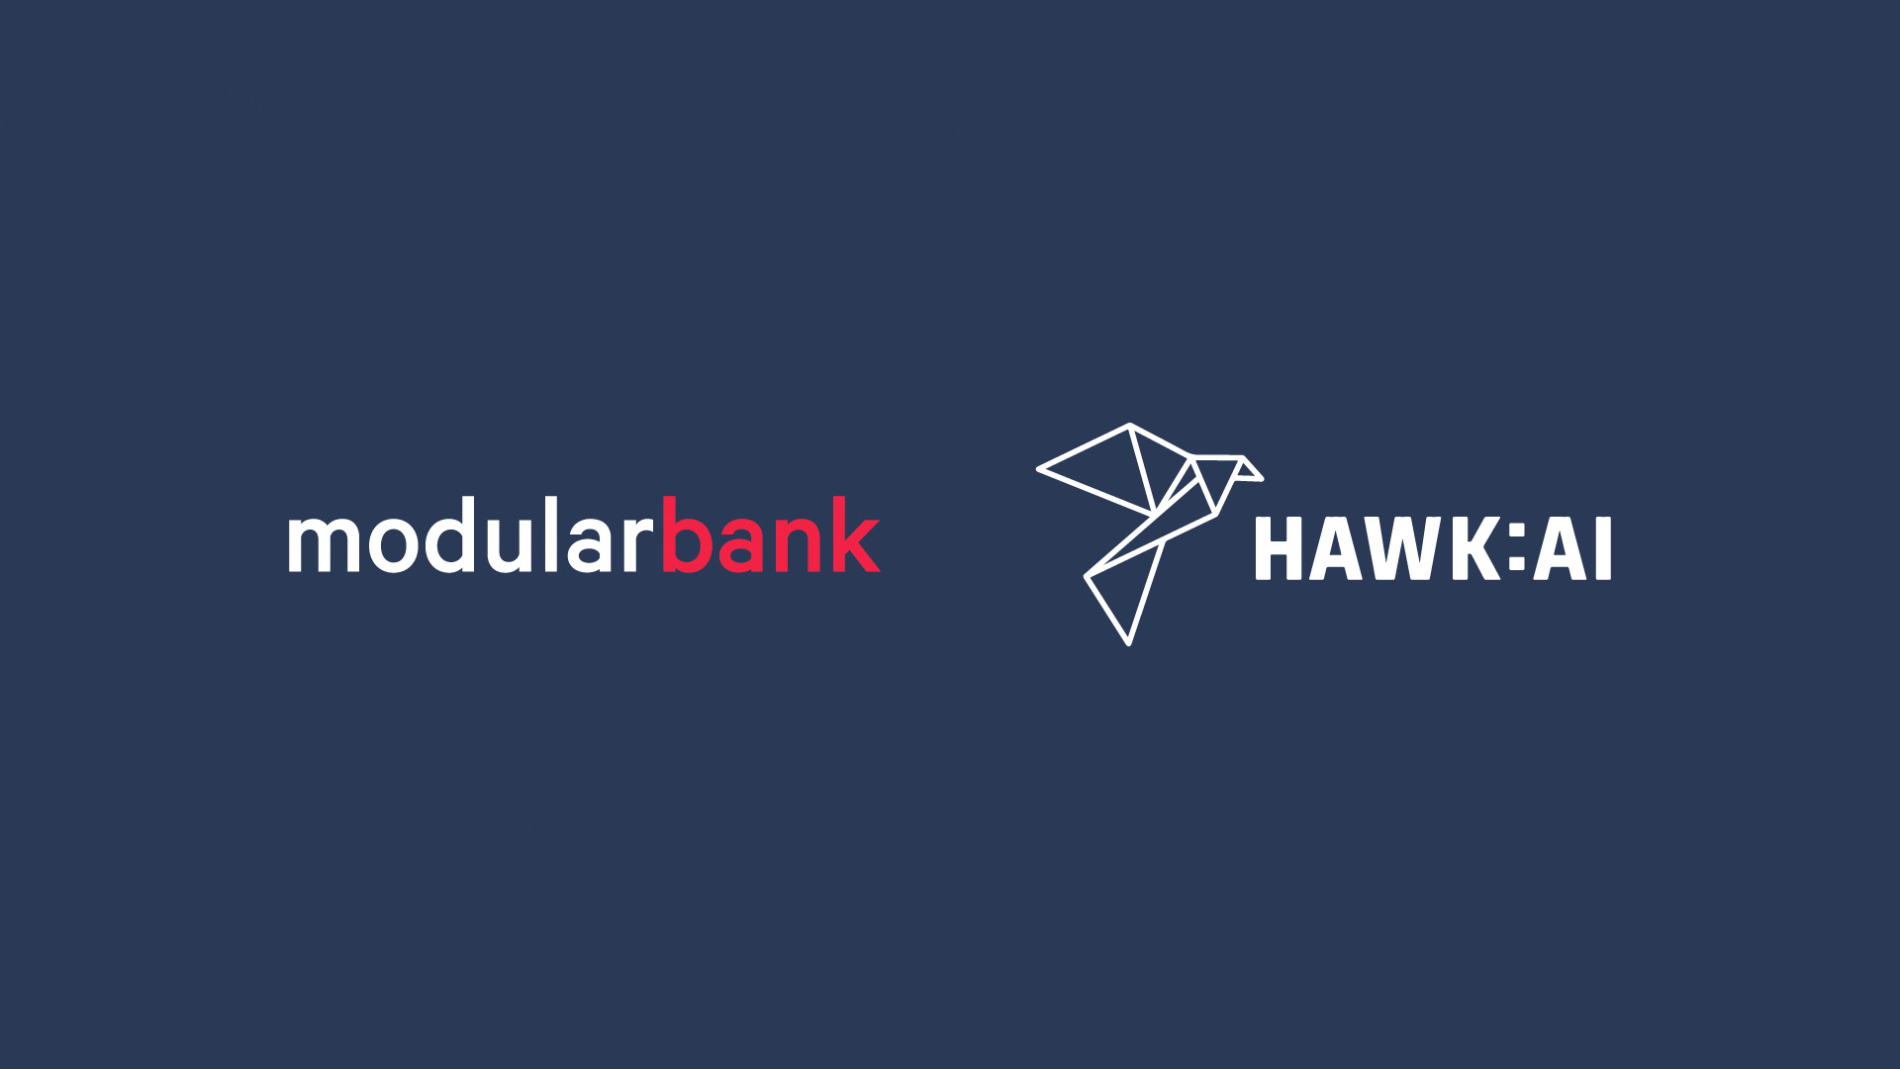 Partnership with Modularbank